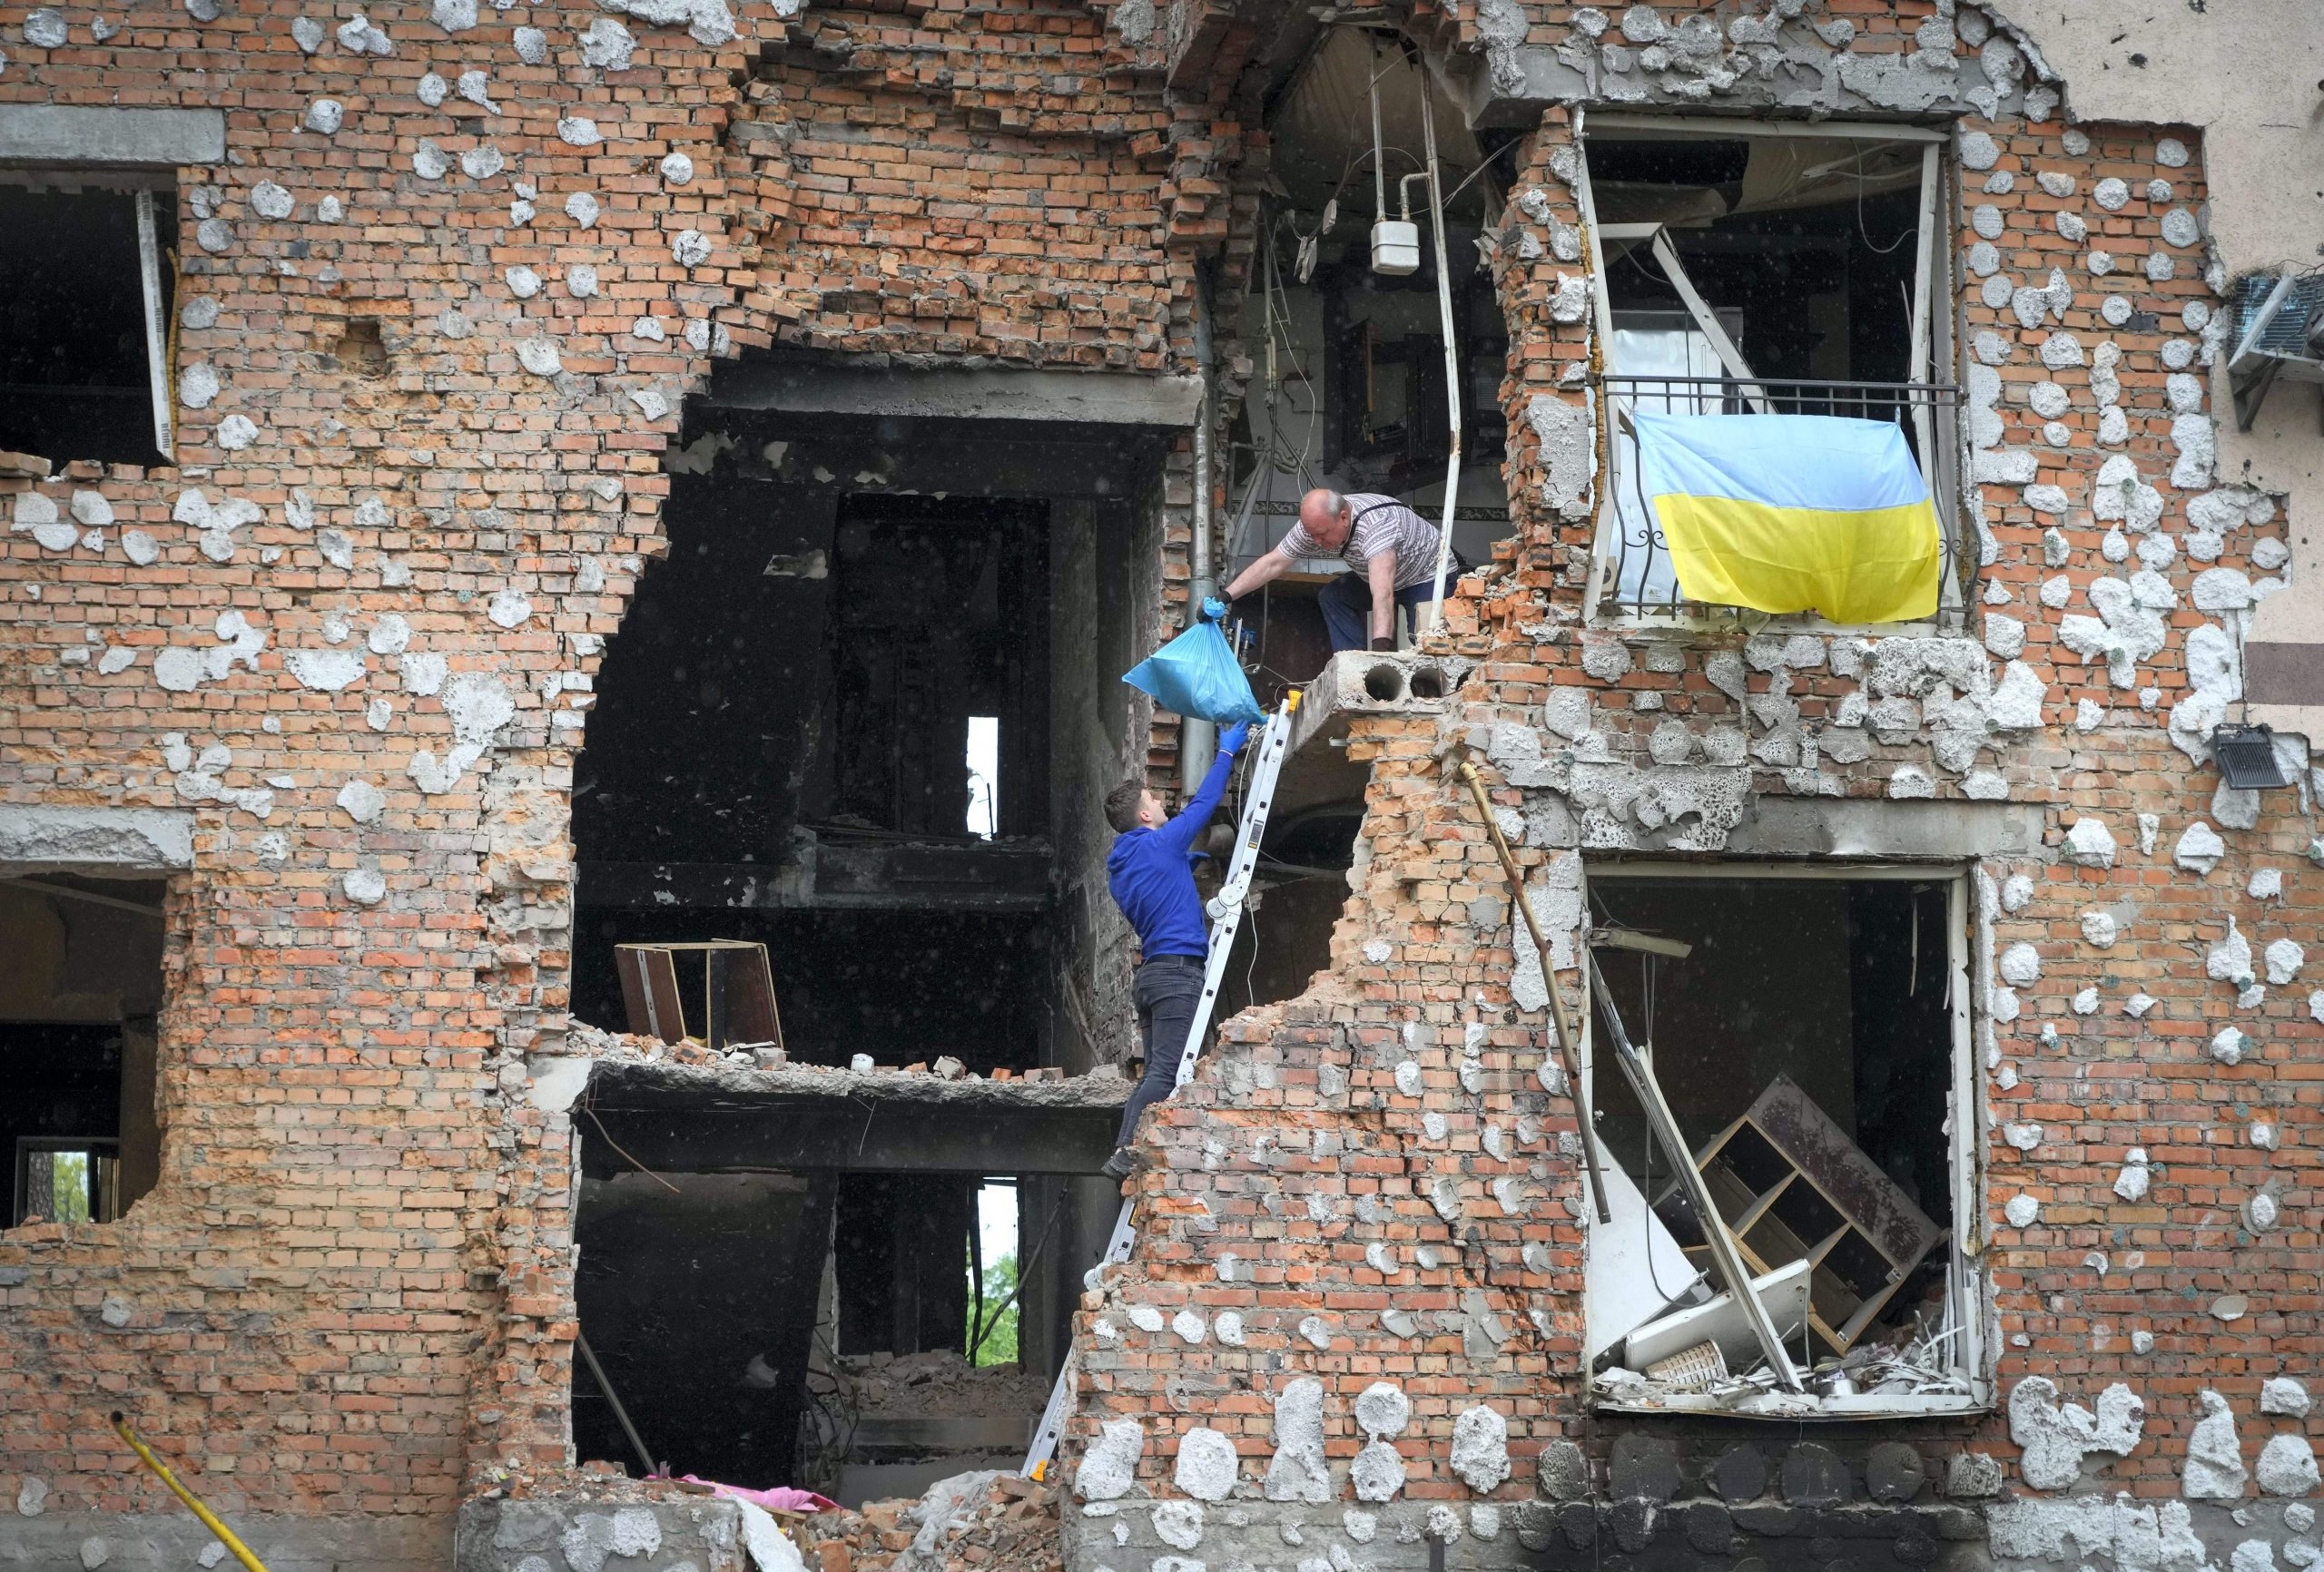 Ukrainian civilians flee towns, cities as Russians advance, evacuations slow, fraught